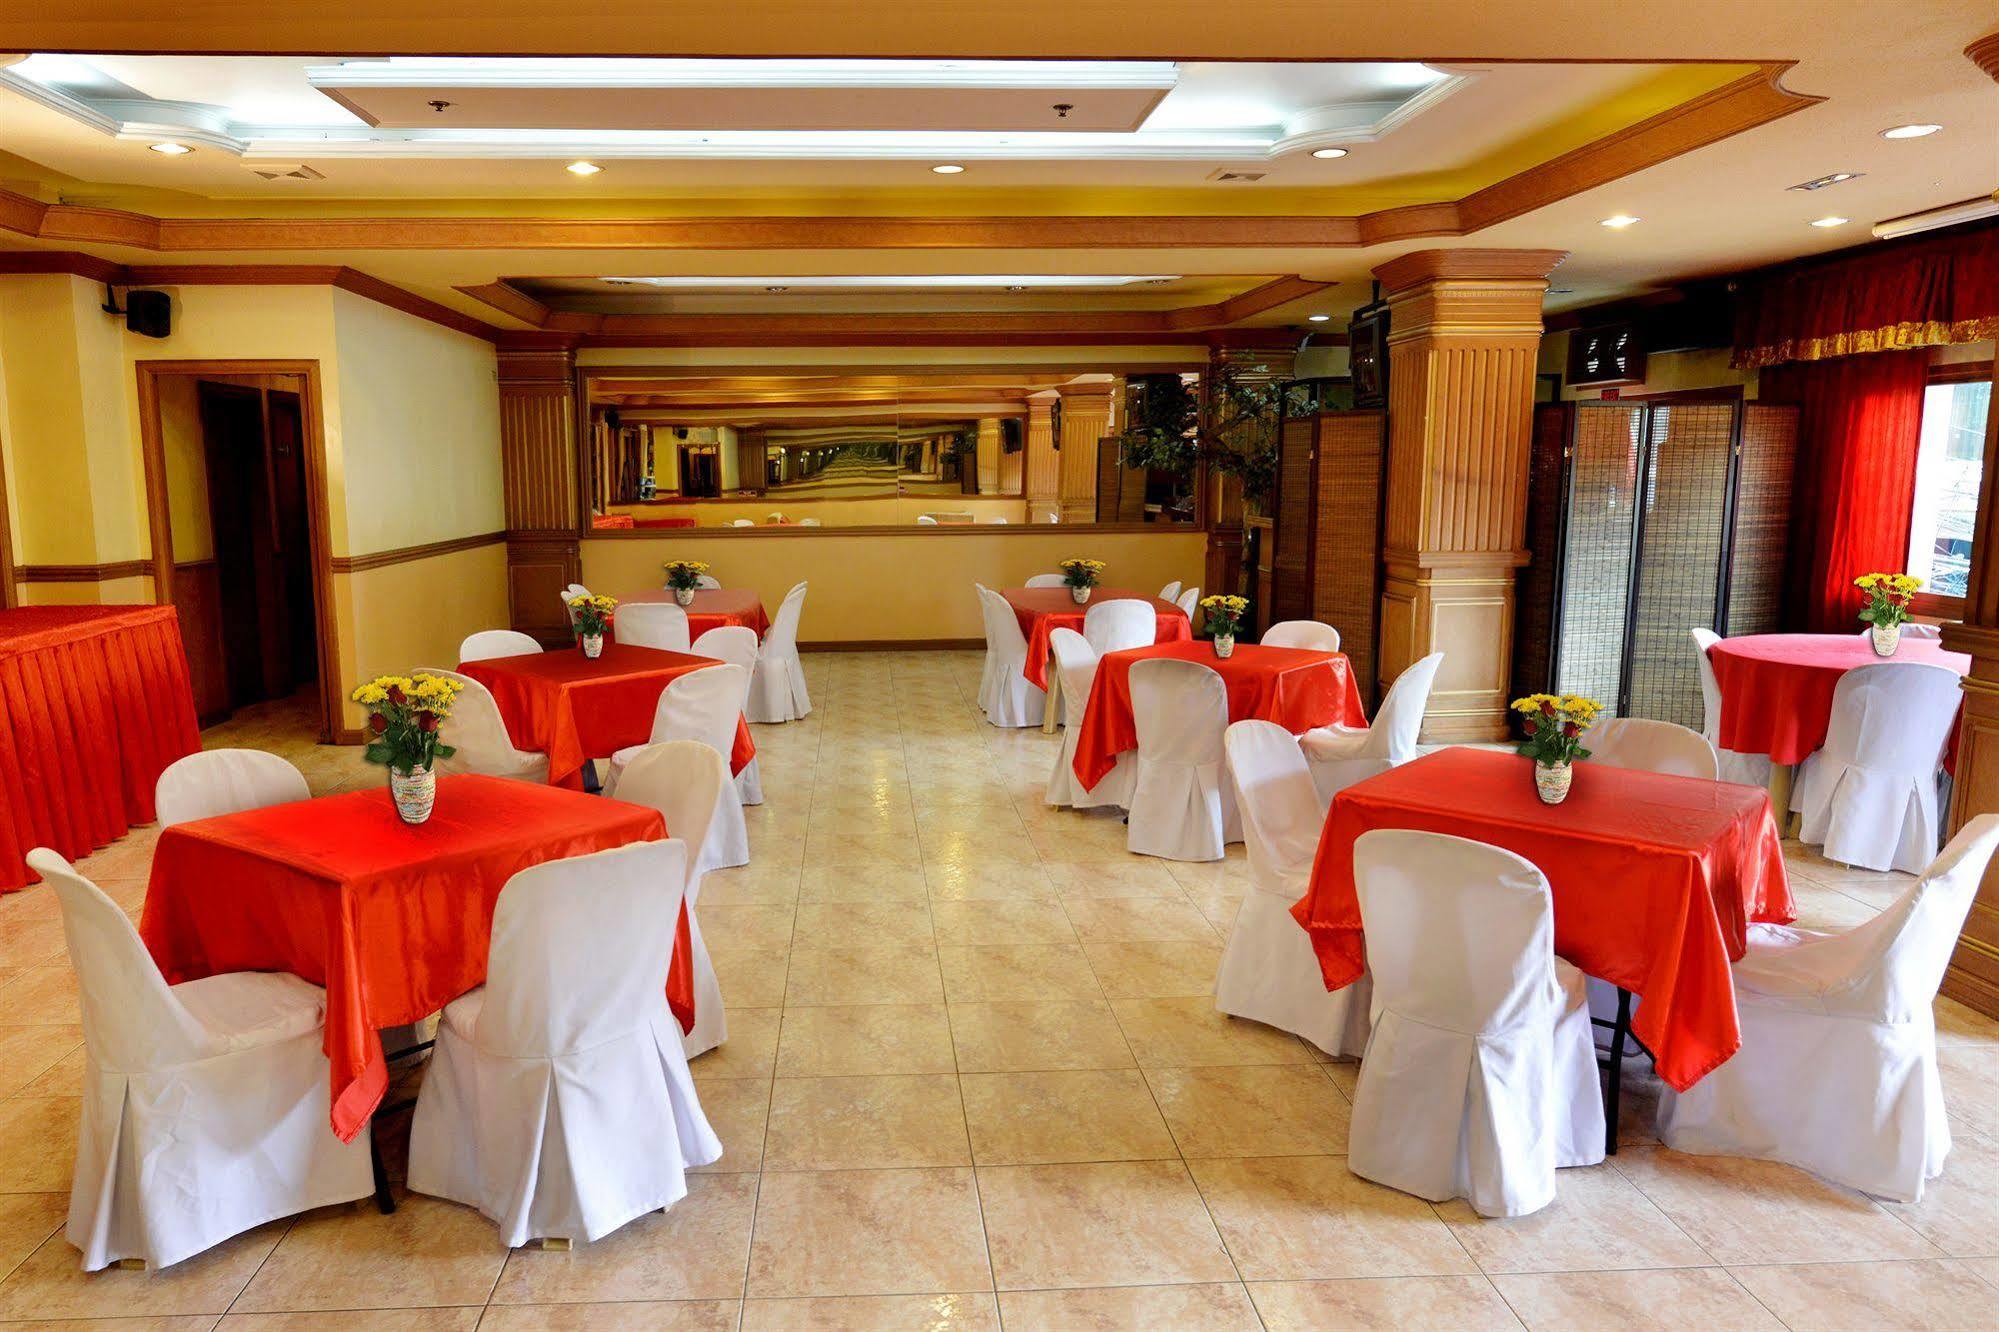 Paladin Hotel Baguio City Εξωτερικό φωτογραφία